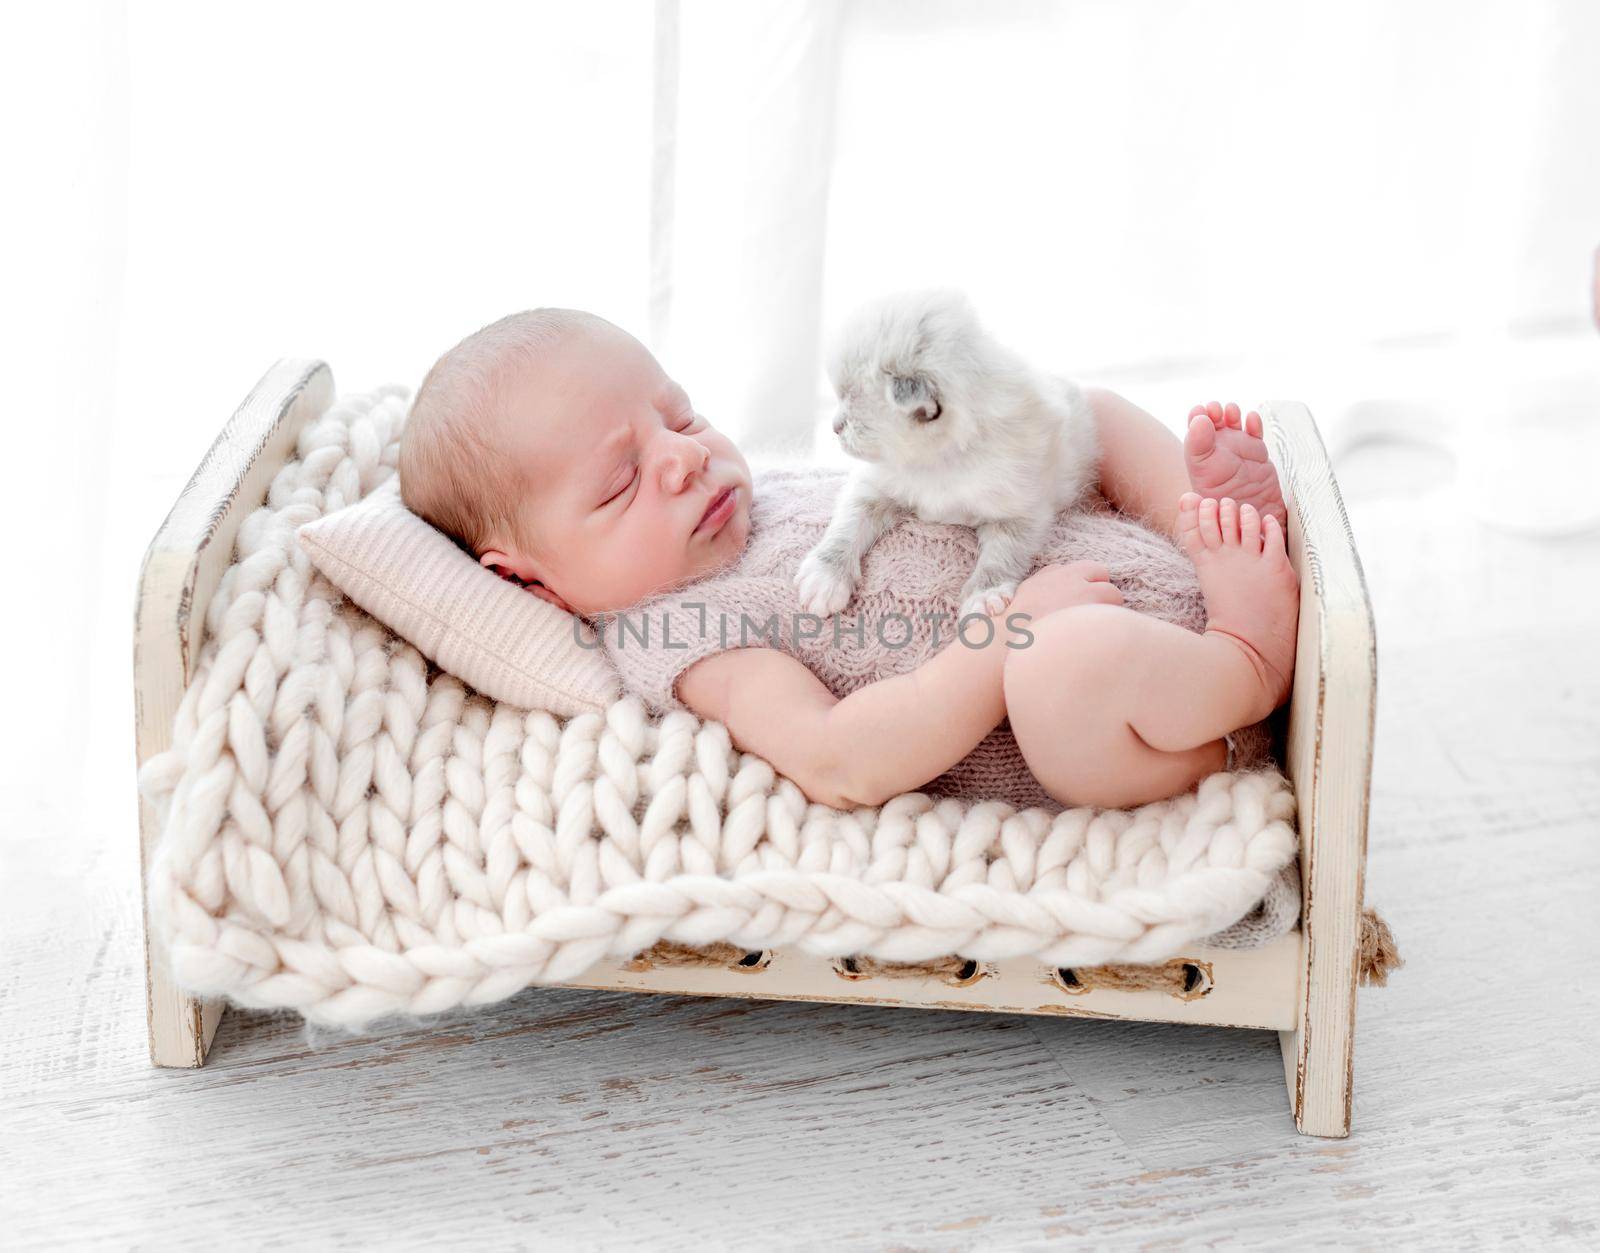 Newborn with kittens by tan4ikk1